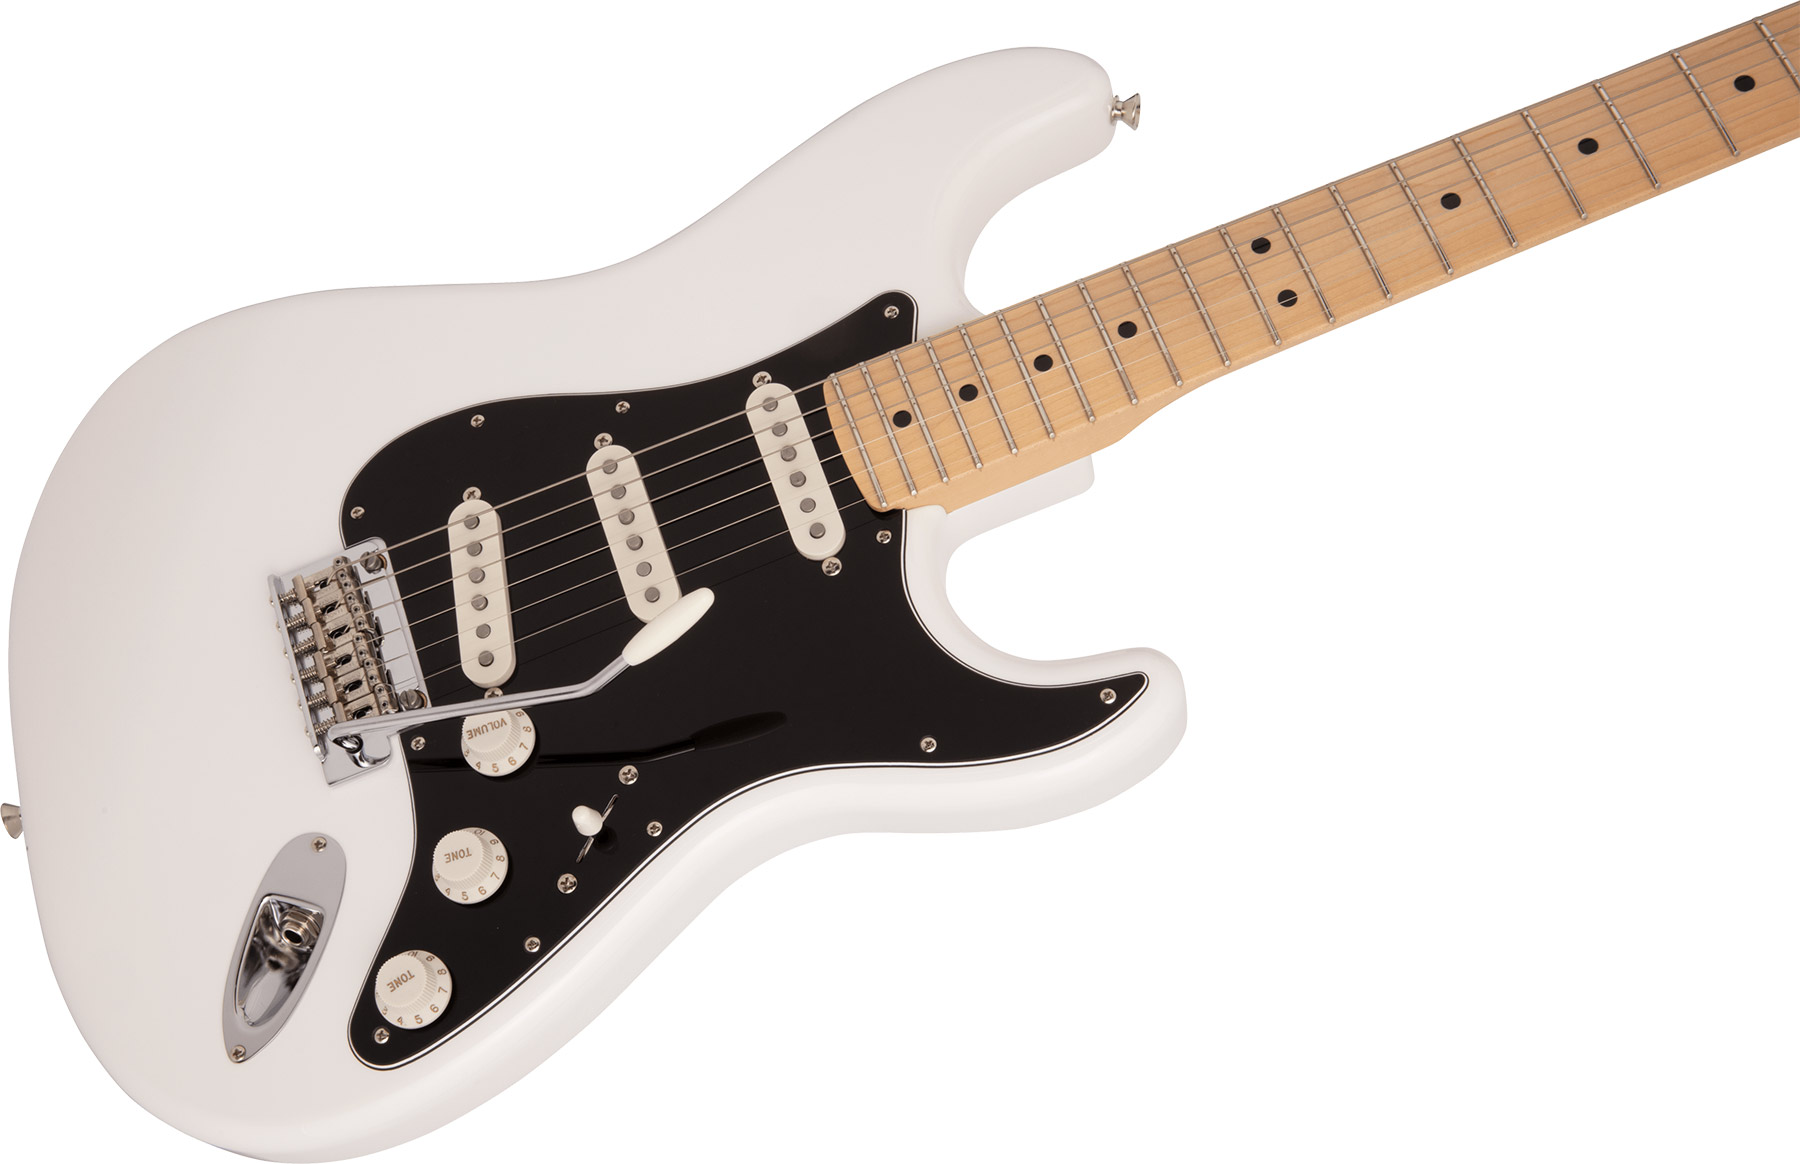 Fender Strat Hybrid Ii Mij Jap 3s Trem Mn - Arctic White - Guitarra eléctrica con forma de str. - Variation 2